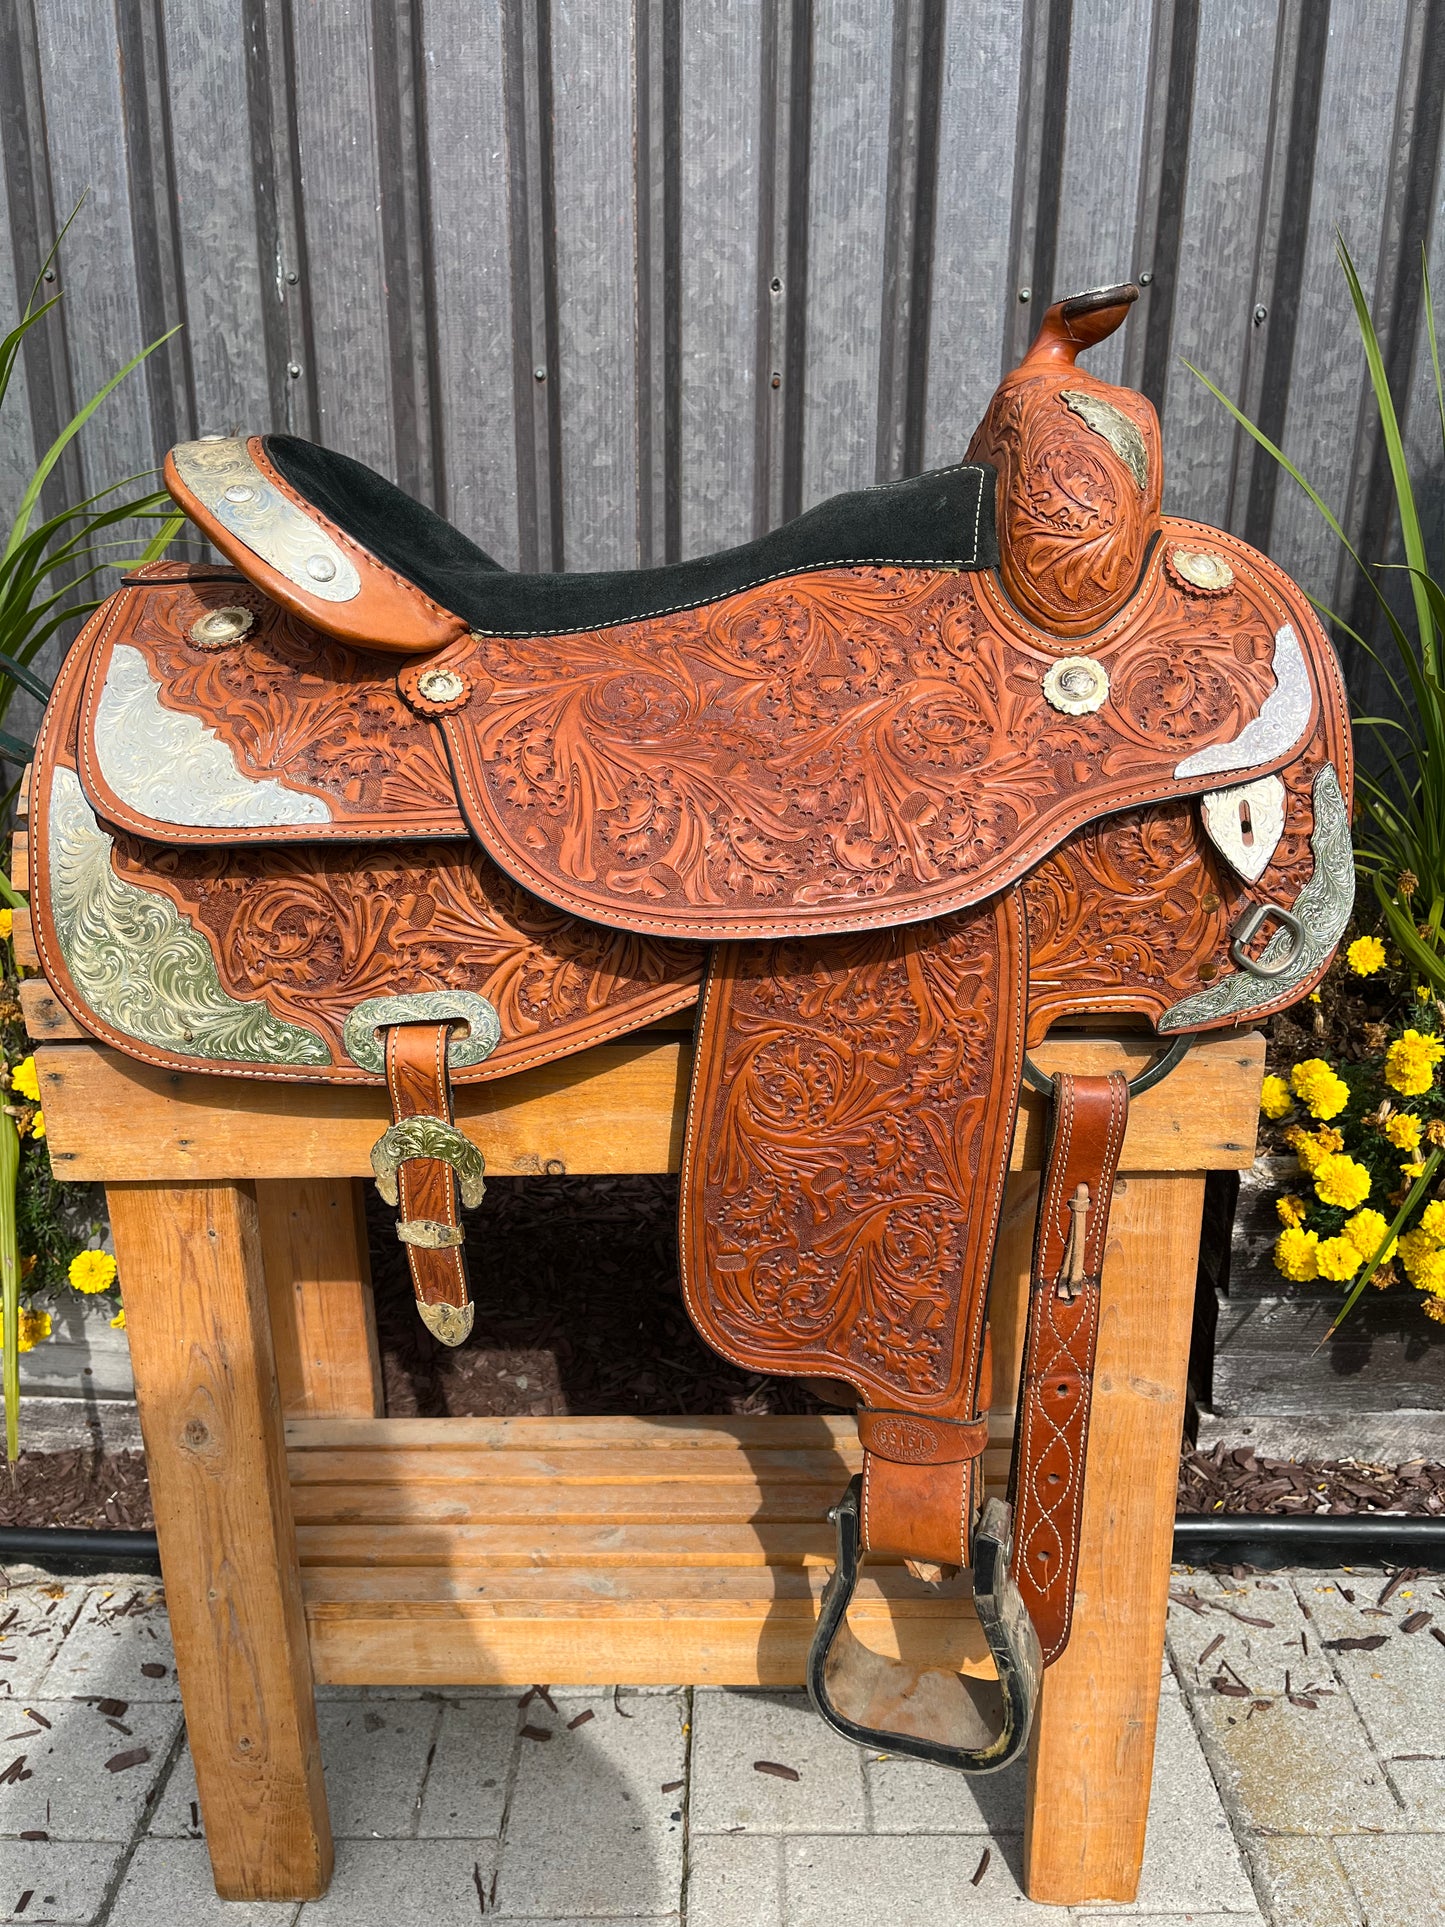 18” Corriente show saddle